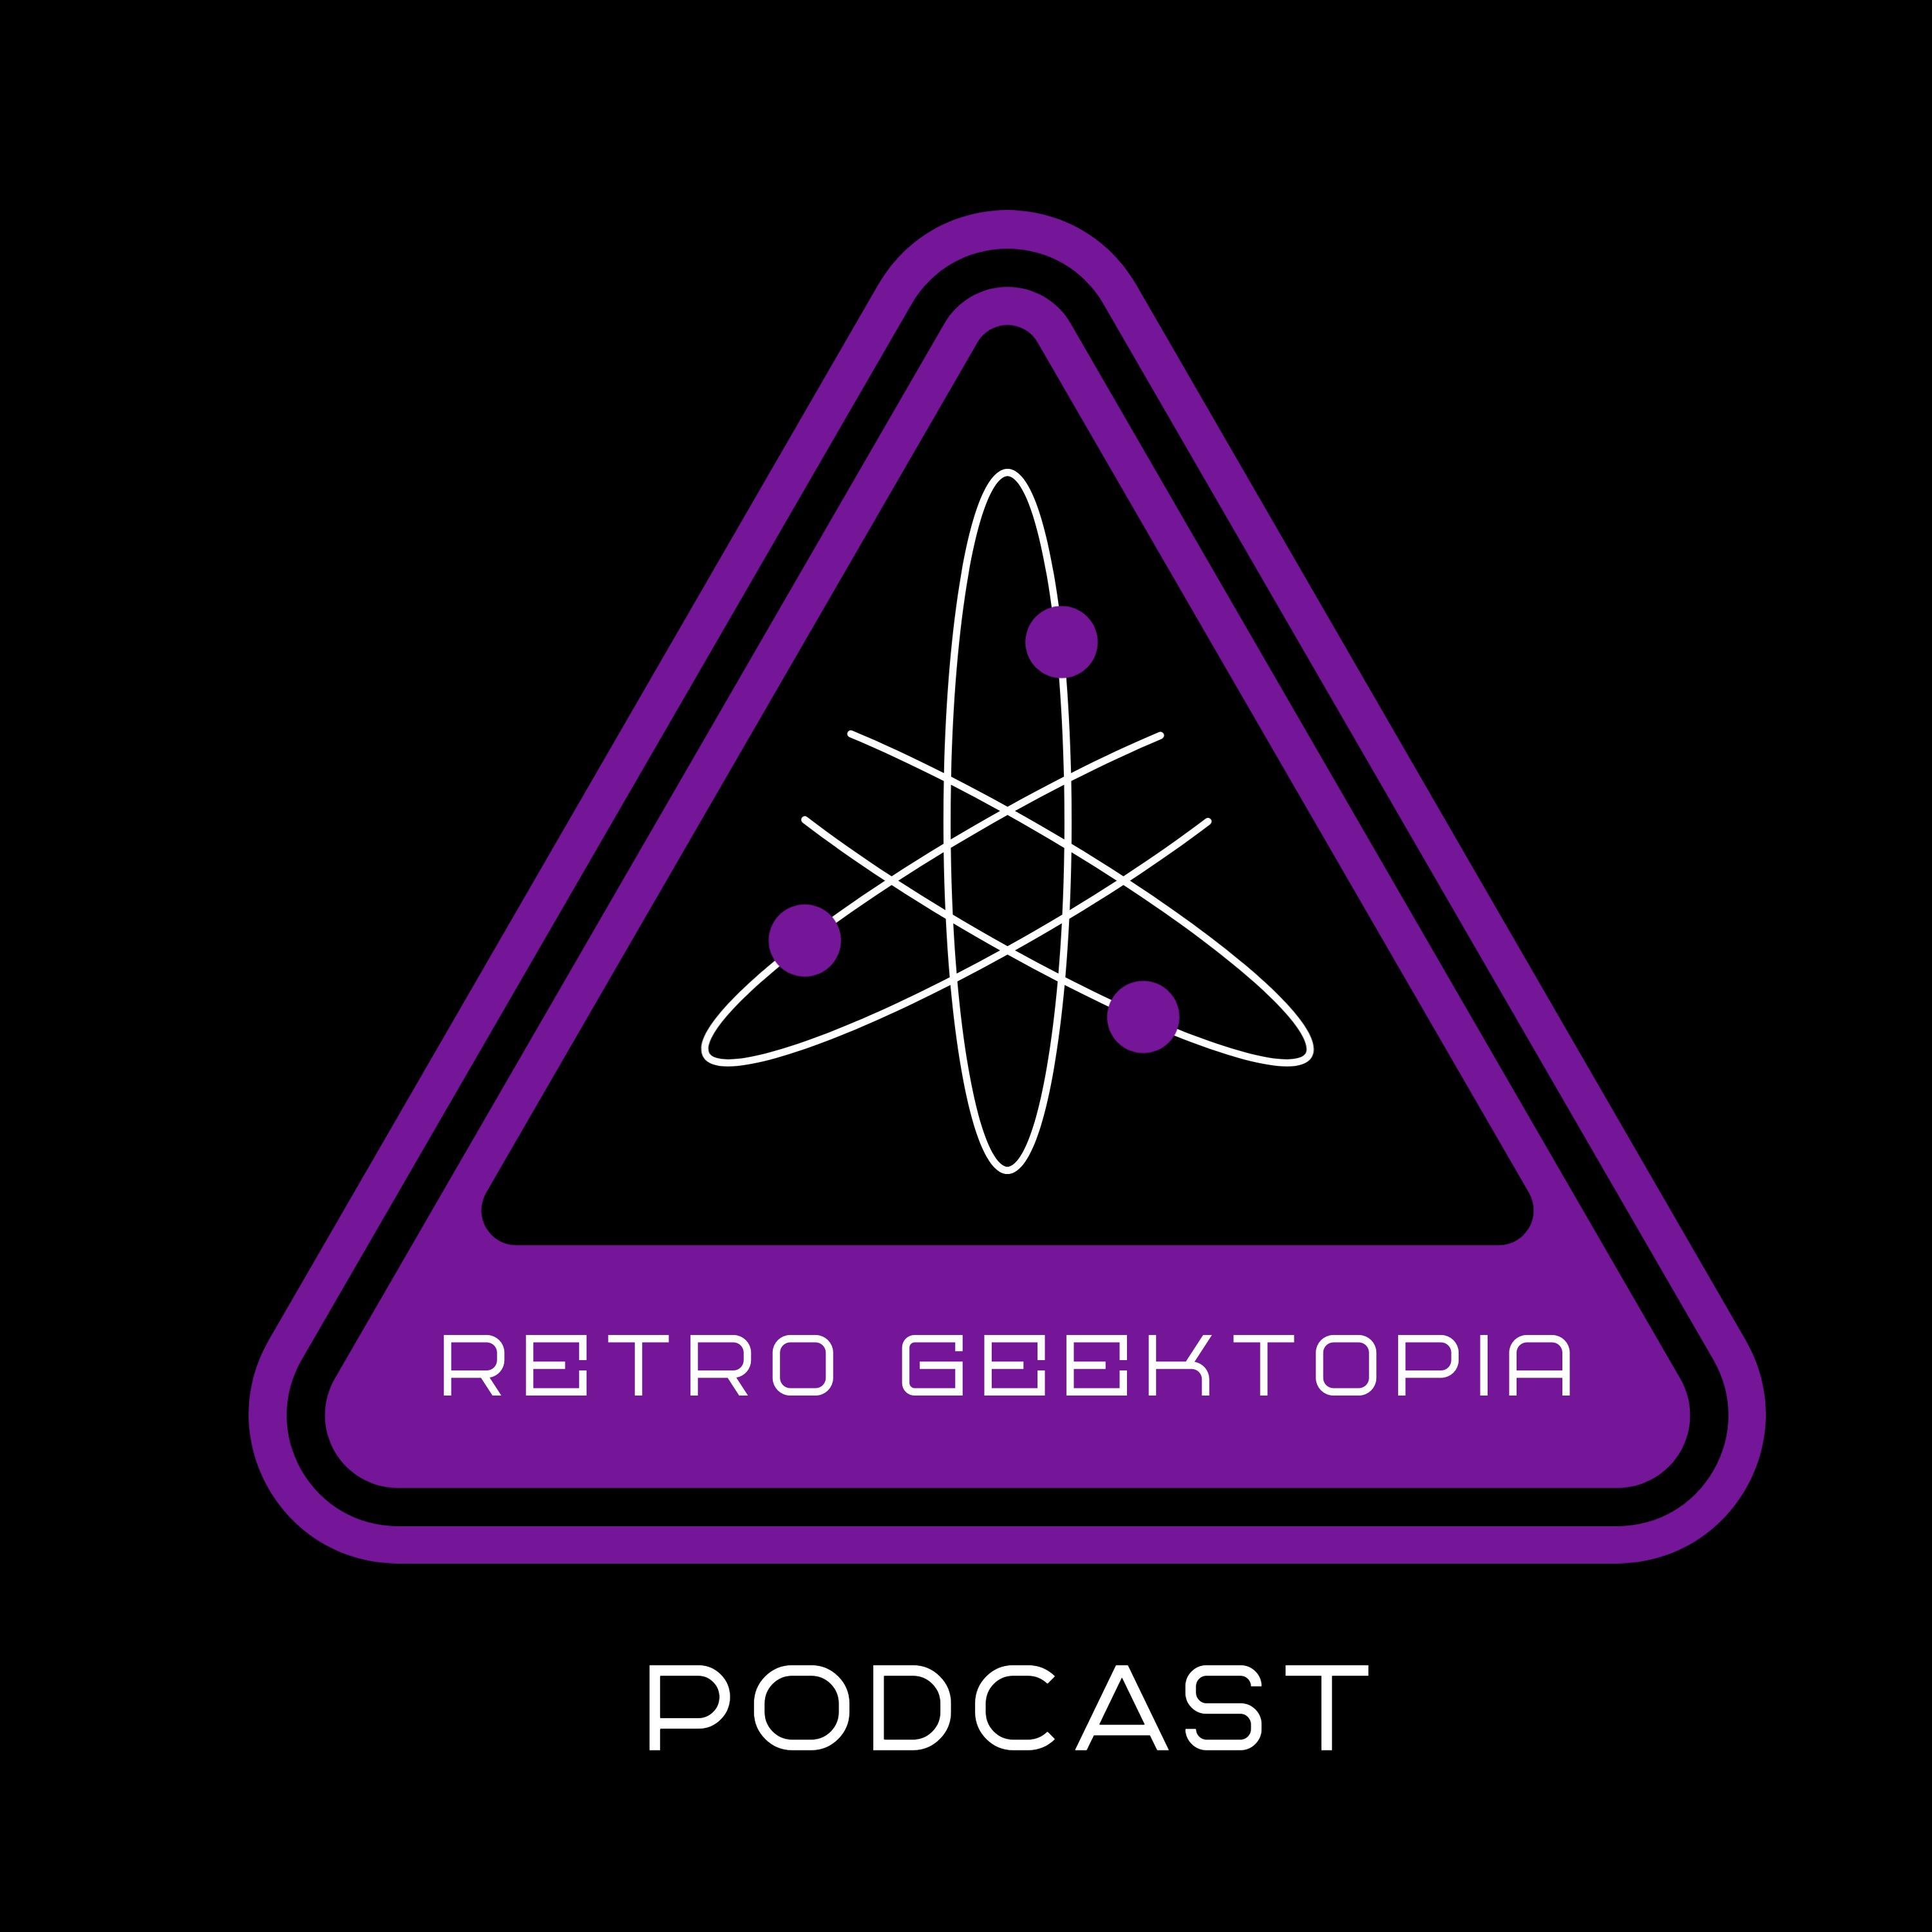 Retro Geektopia podcast